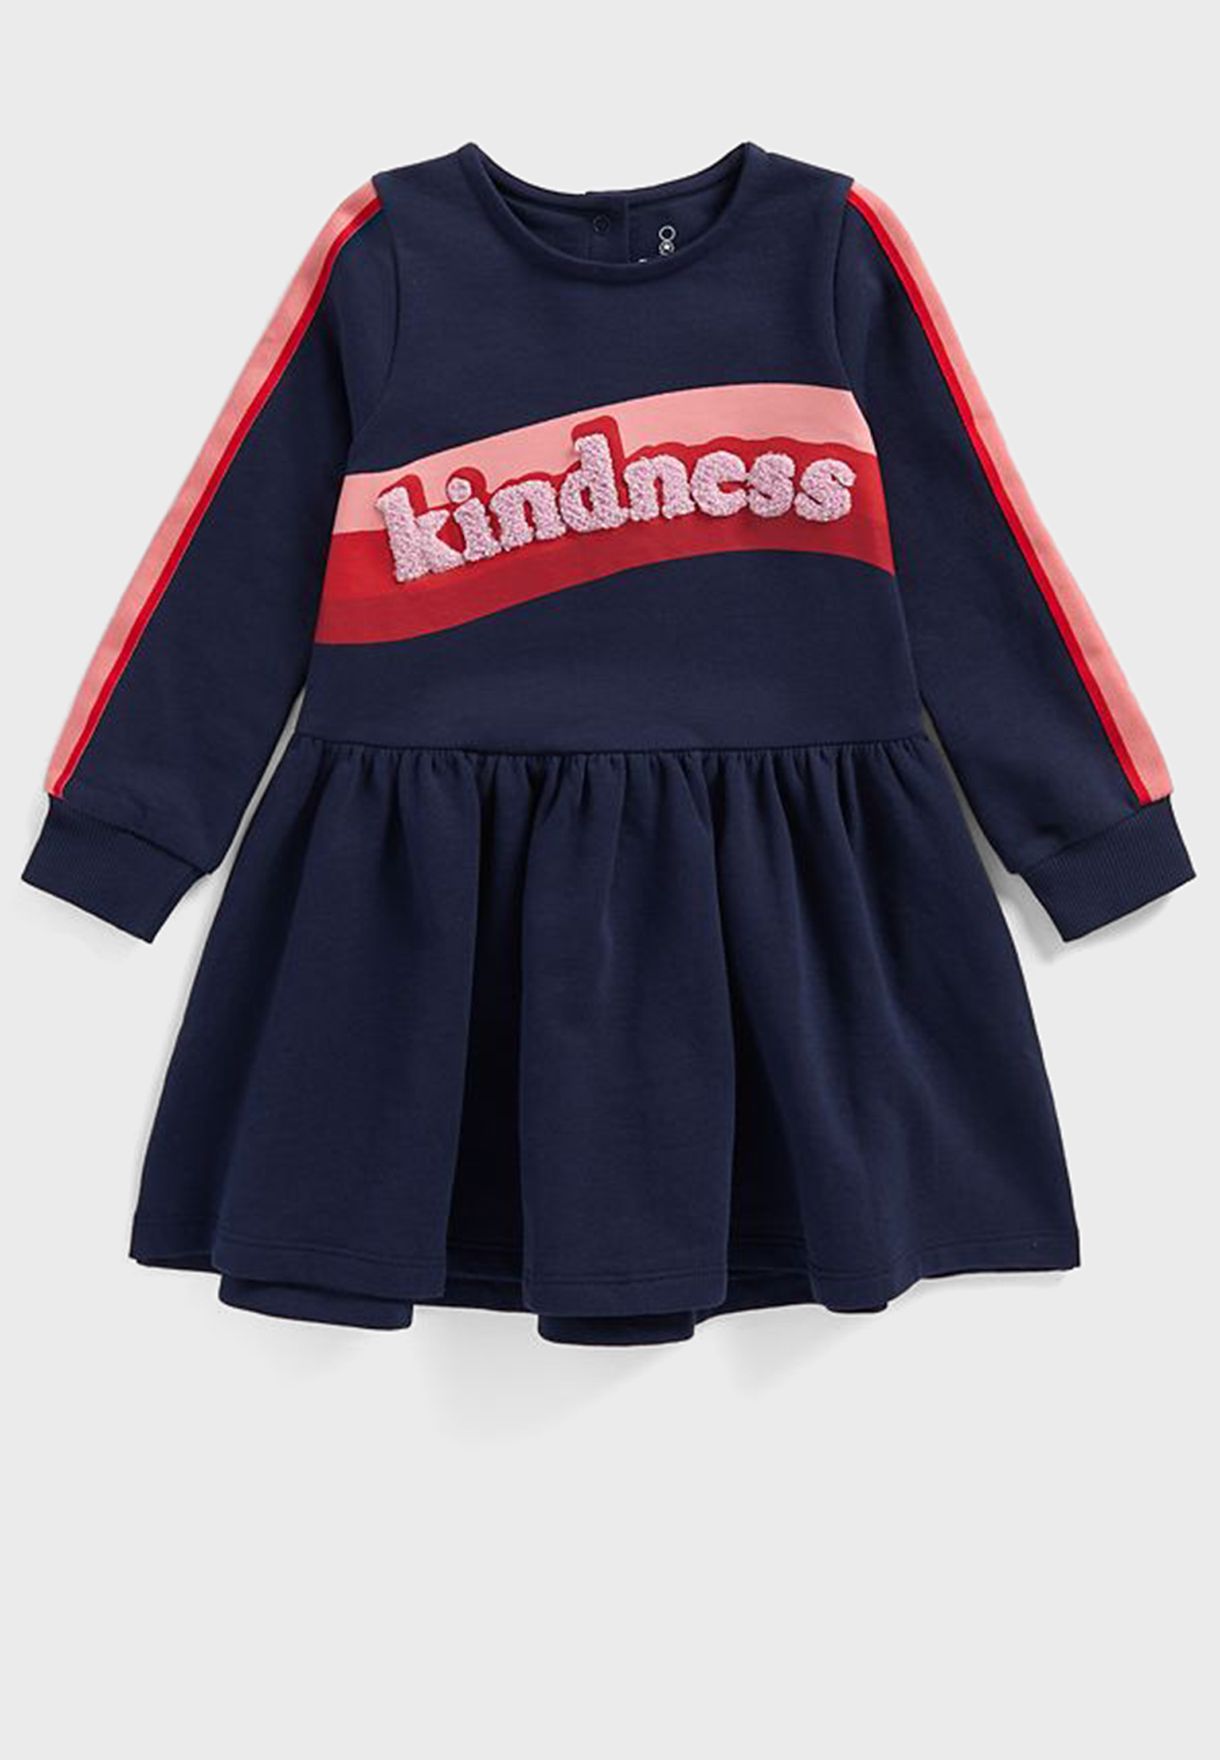 Kids Kindness Dress